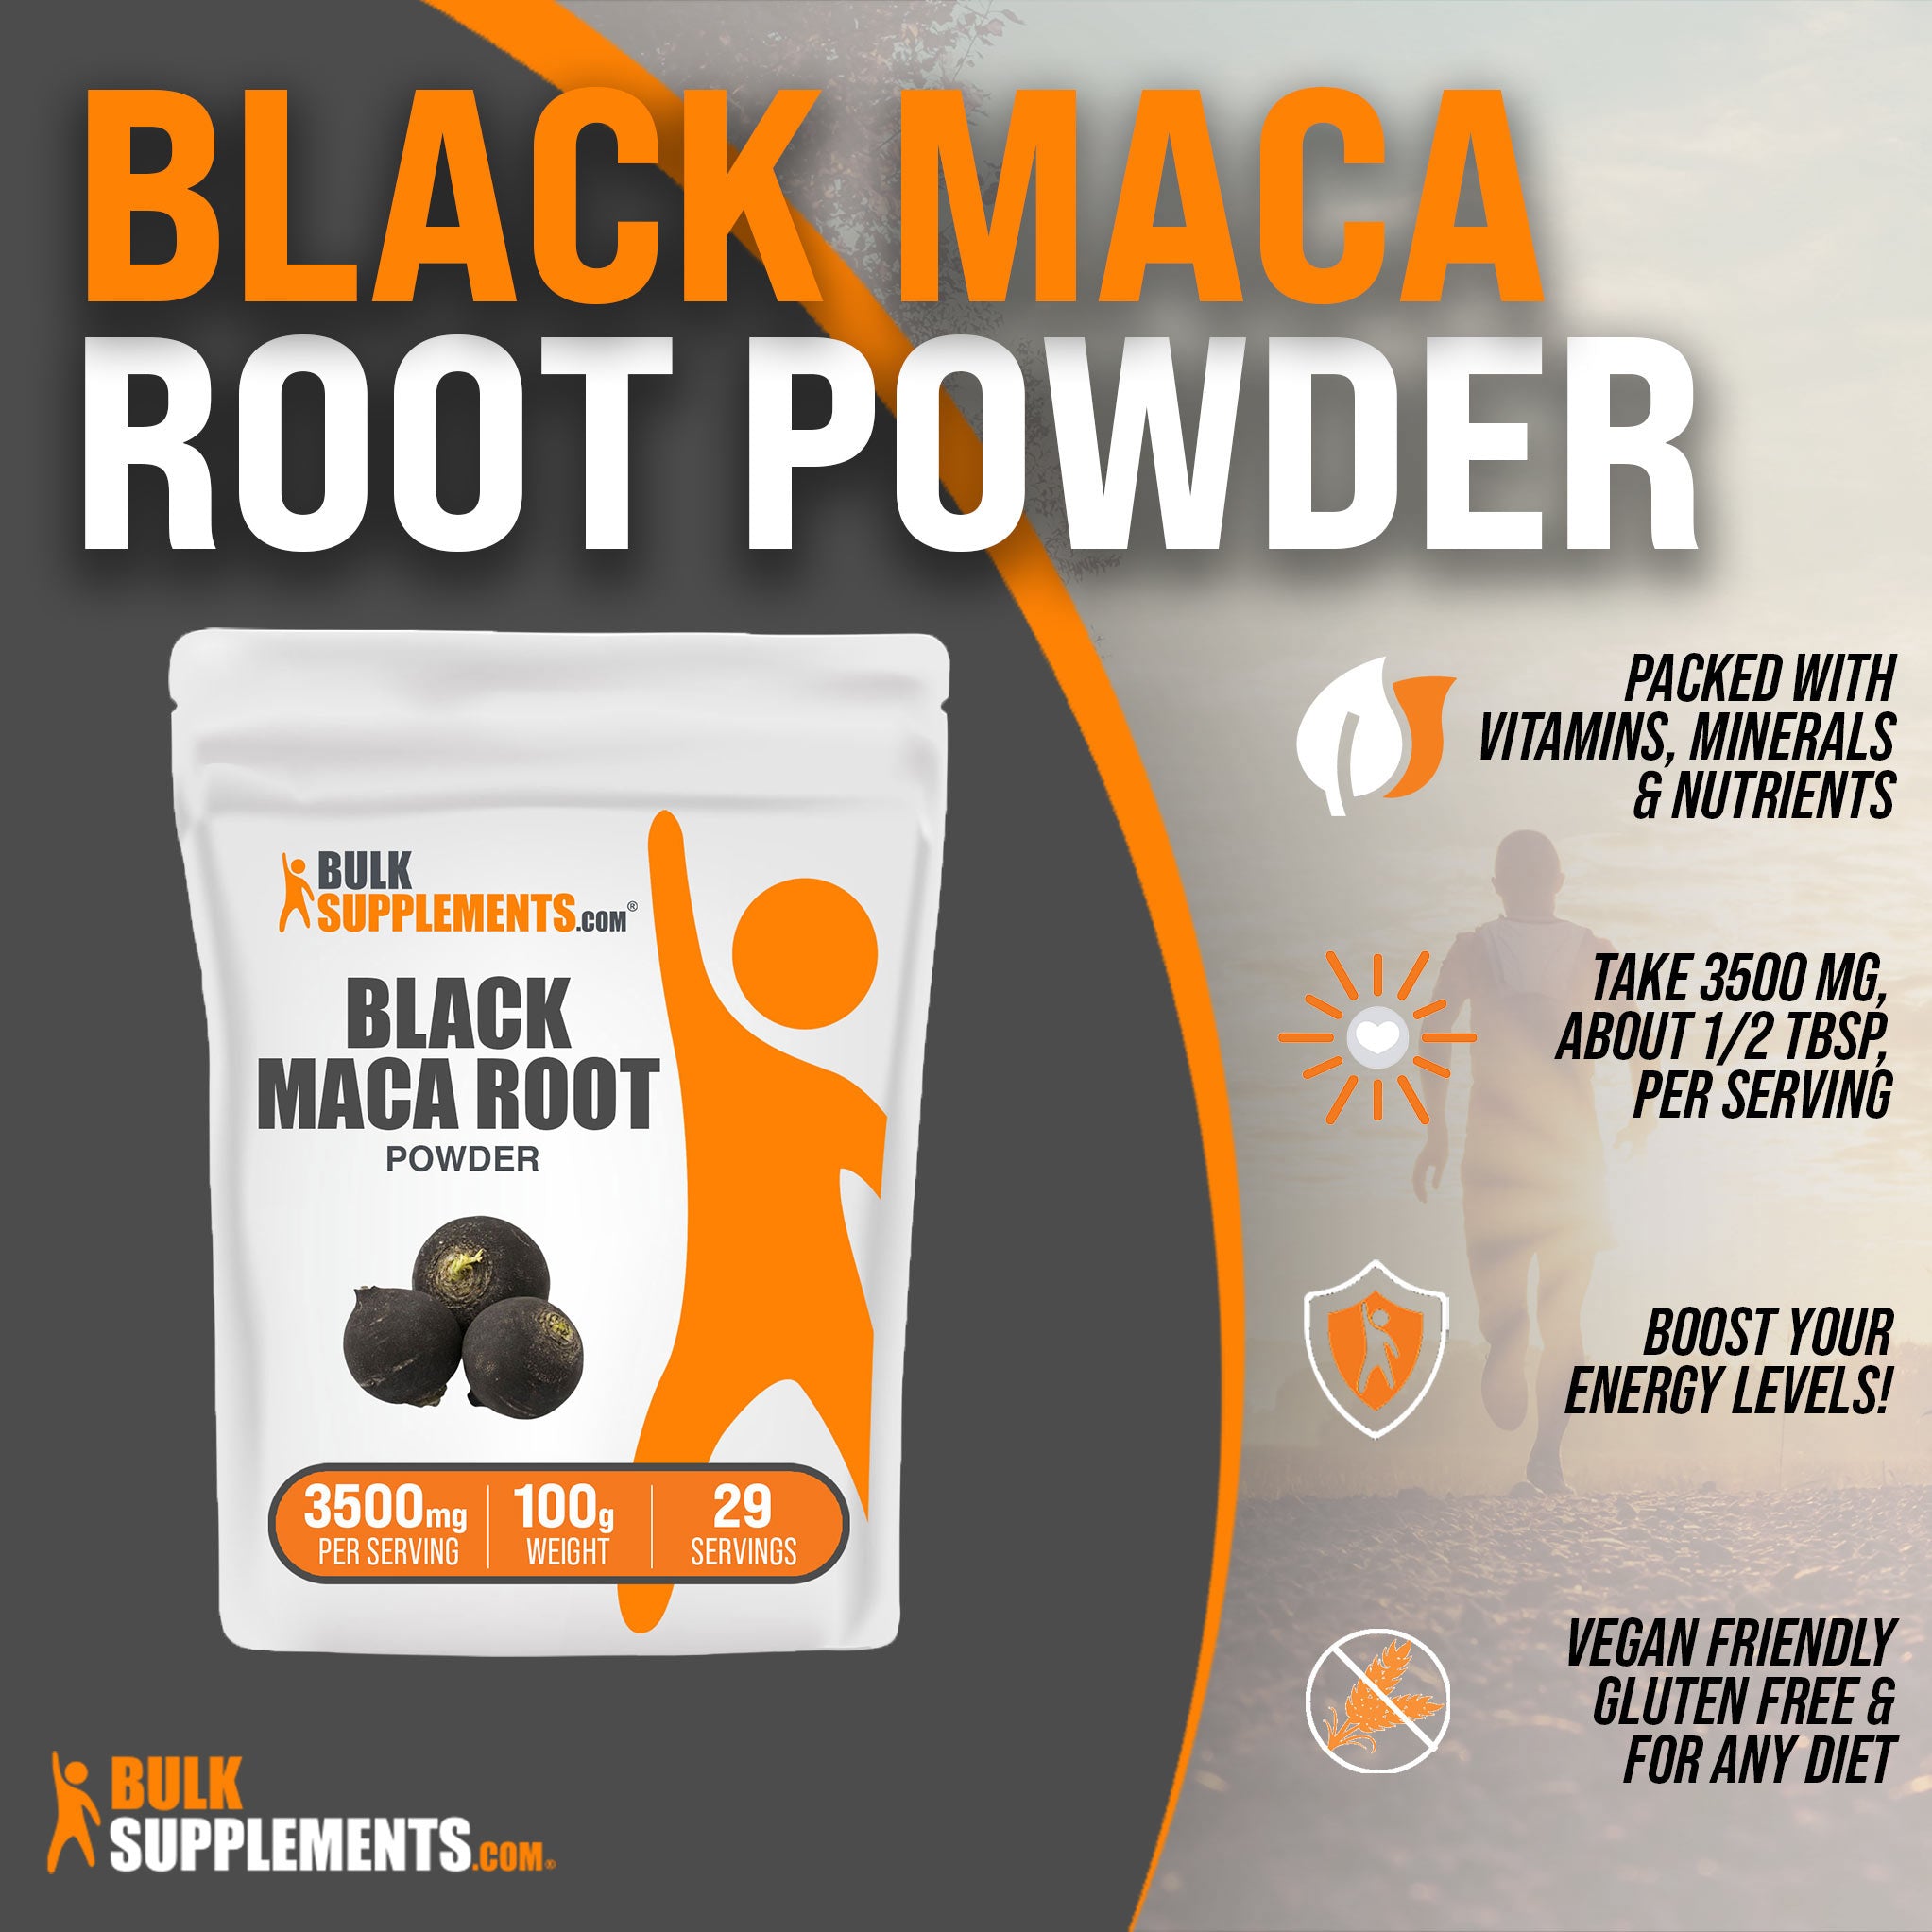 Black Maca Powder Benefits